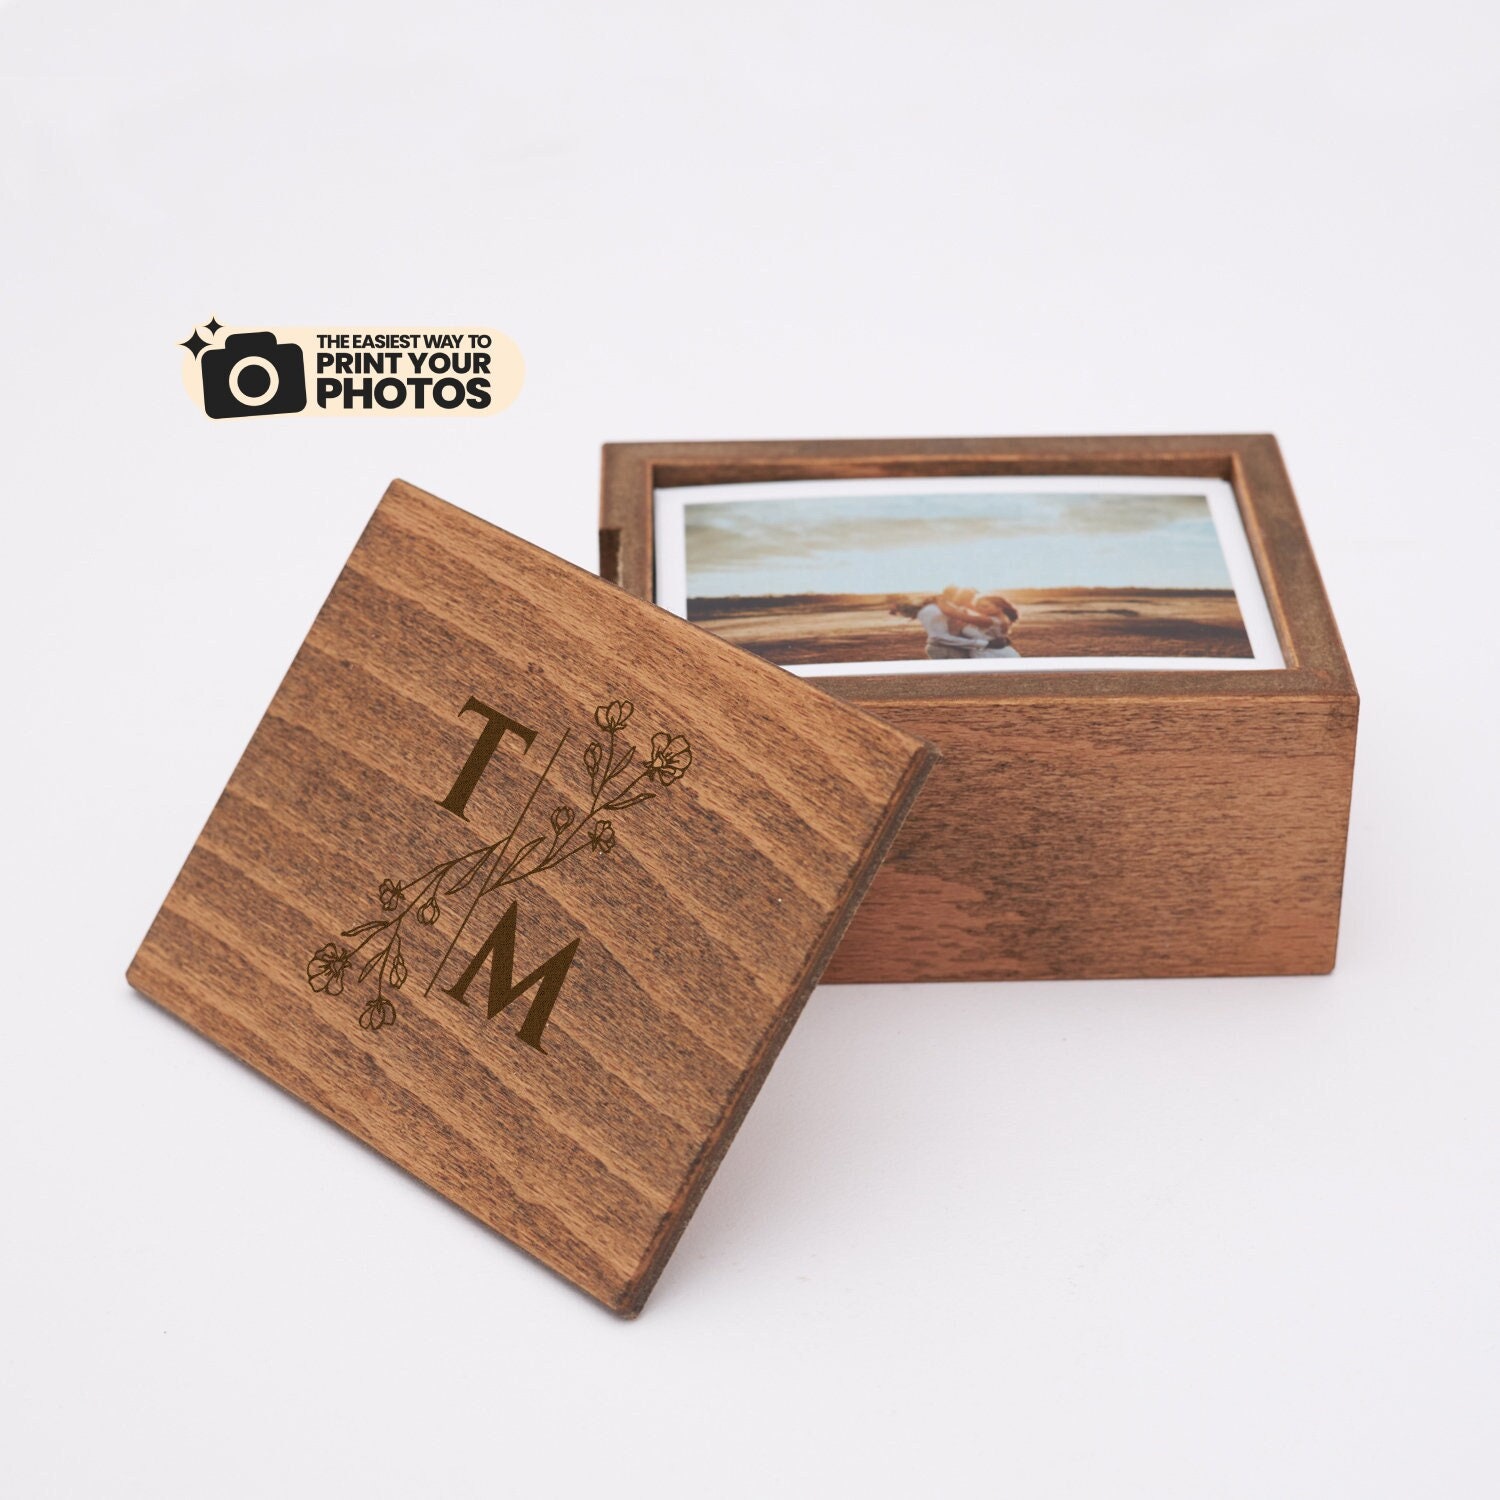 Wooden Instax Mini Polaroid Frame and Photo Storage Box - Rustic